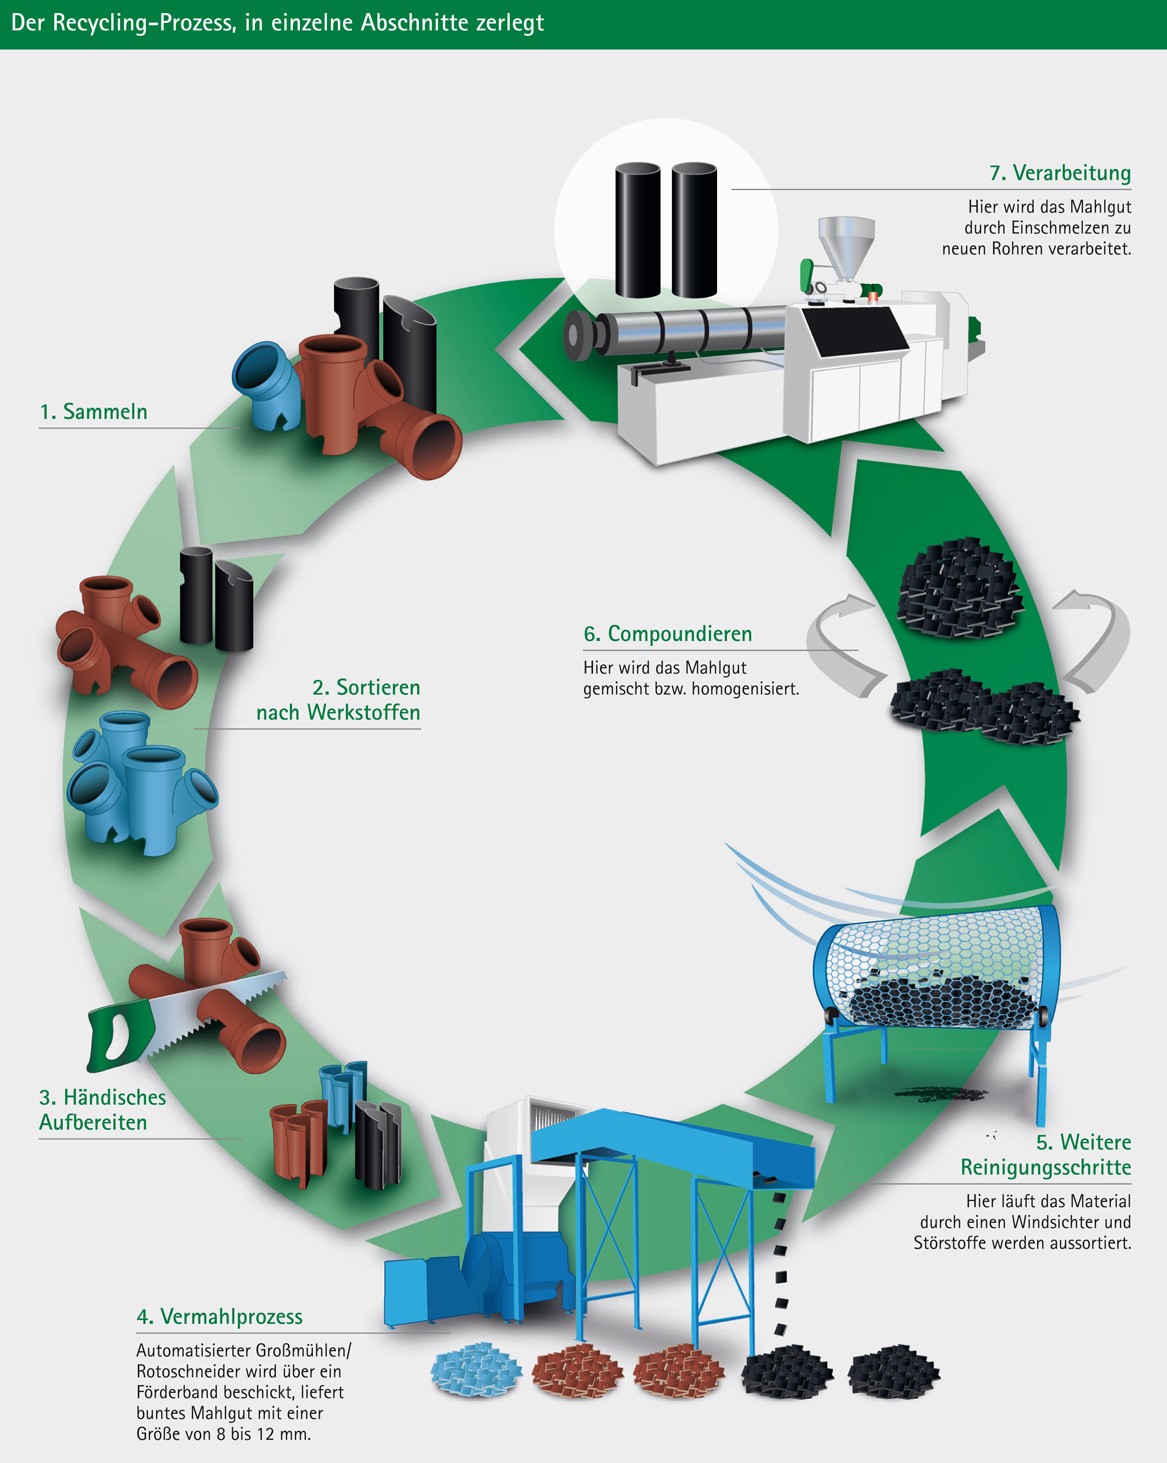 Der Recycling-Prozess